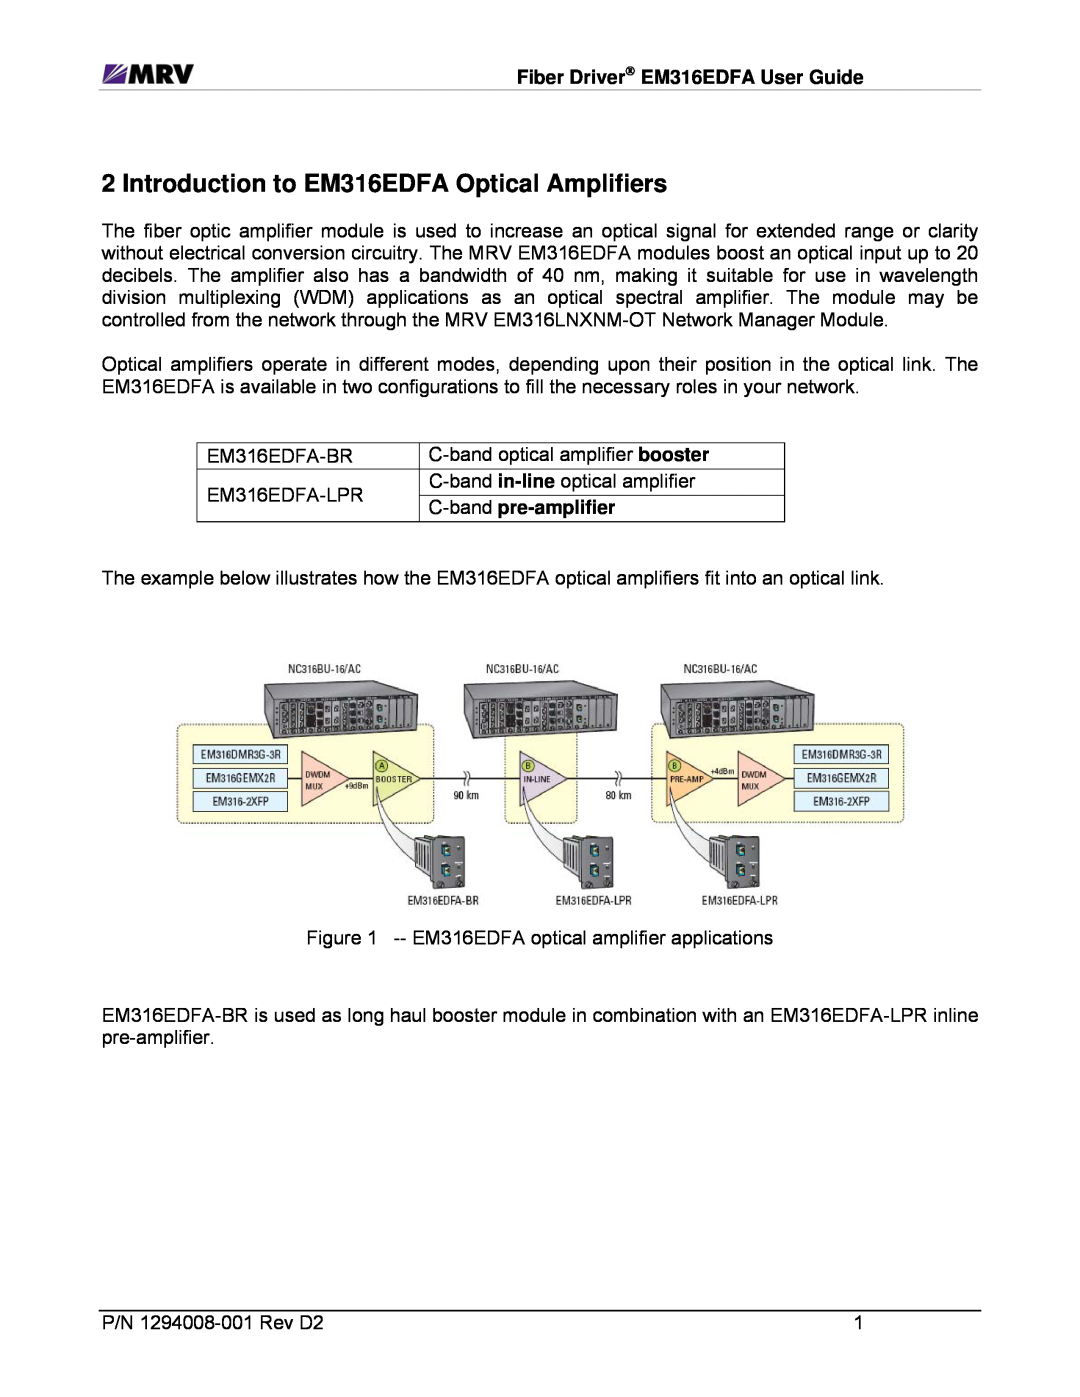 MRV Communications EM316EDFA-BR manual Introduction to EM316EDFA Optical Amplifiers, Fiber Driver EM316EDFA User Guide 